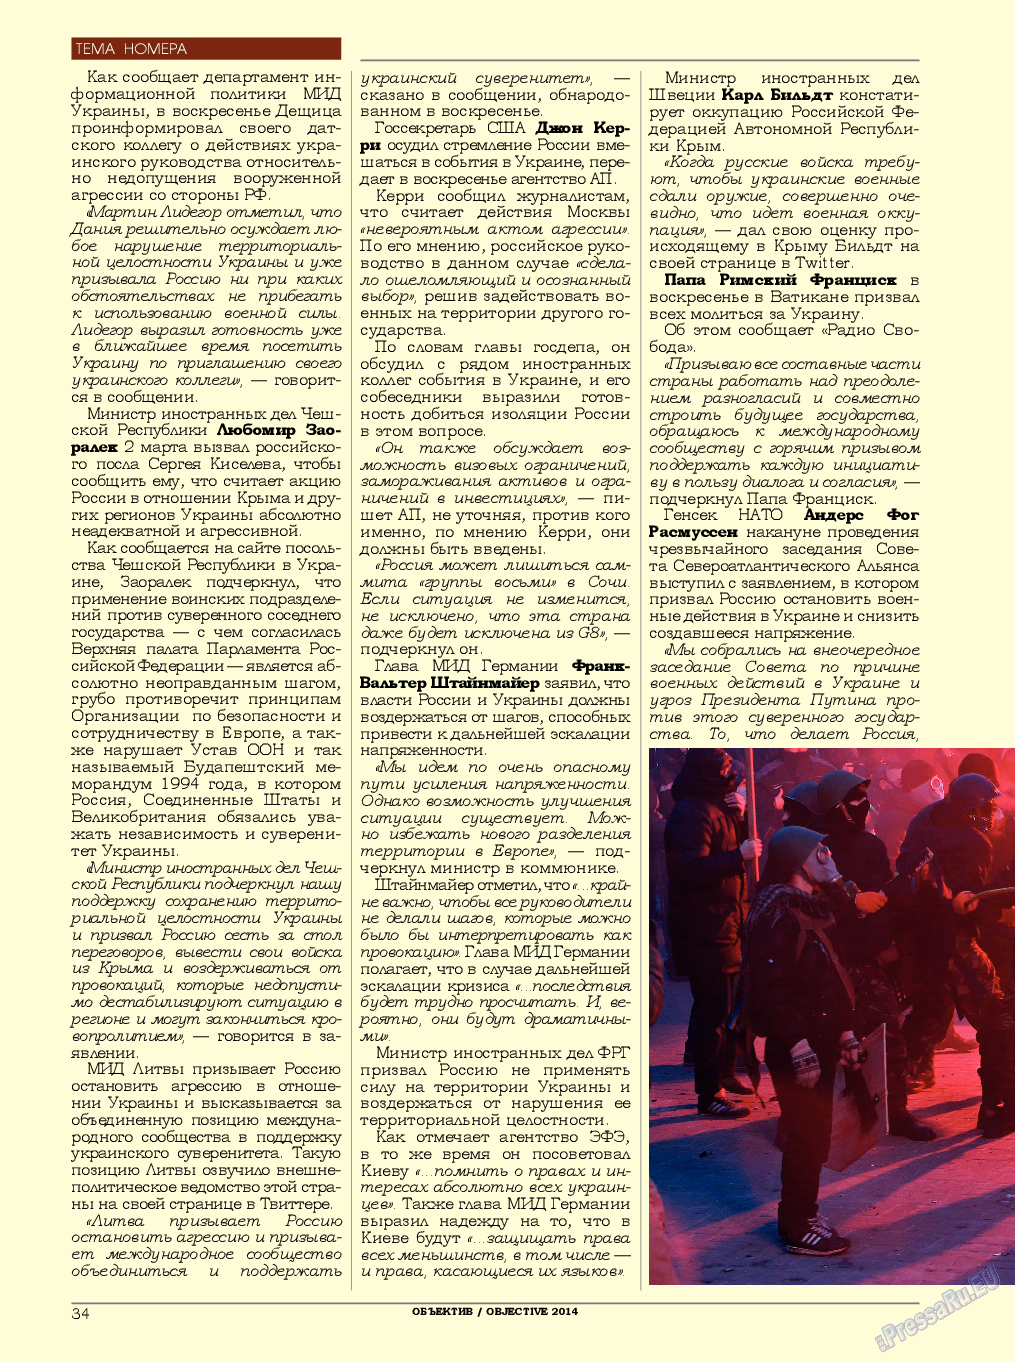 Объектив EU, журнал. 2014 №2 стр.34